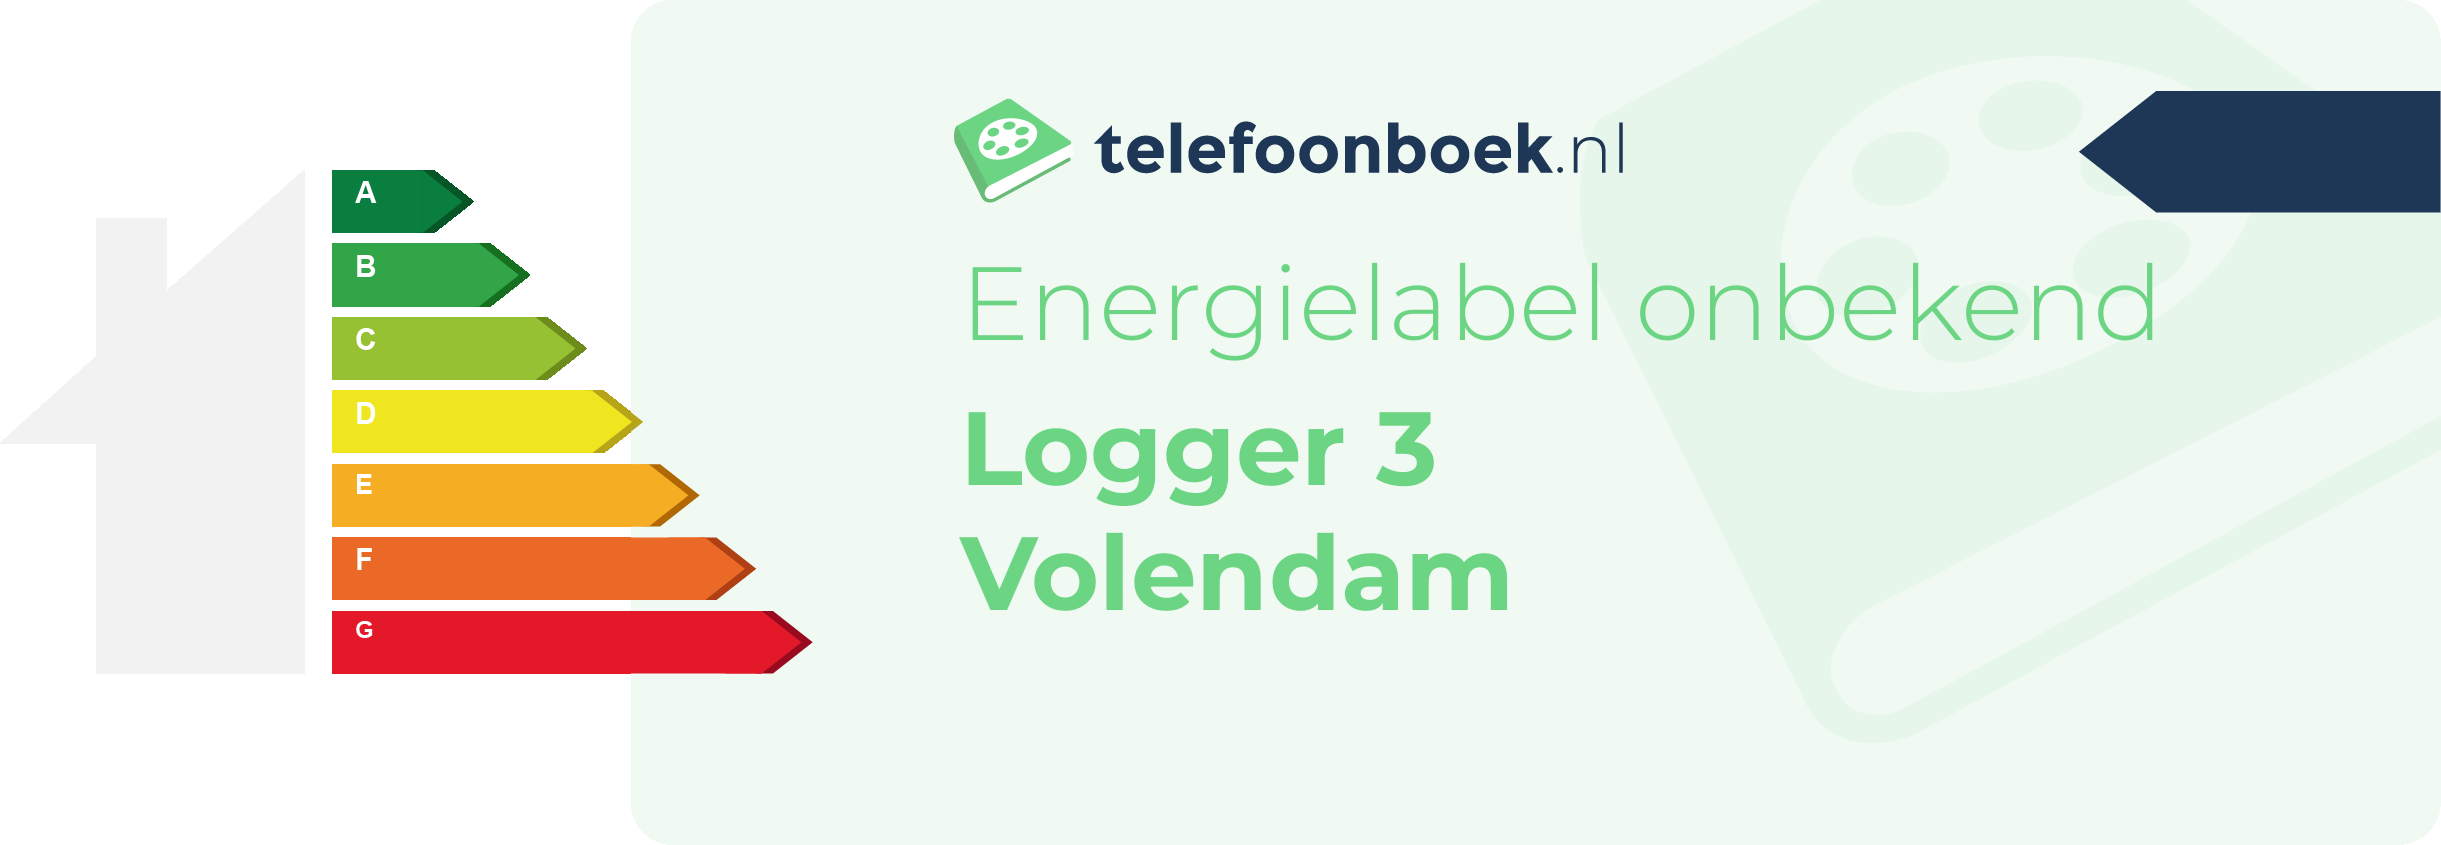 Energielabel Logger 3 Volendam